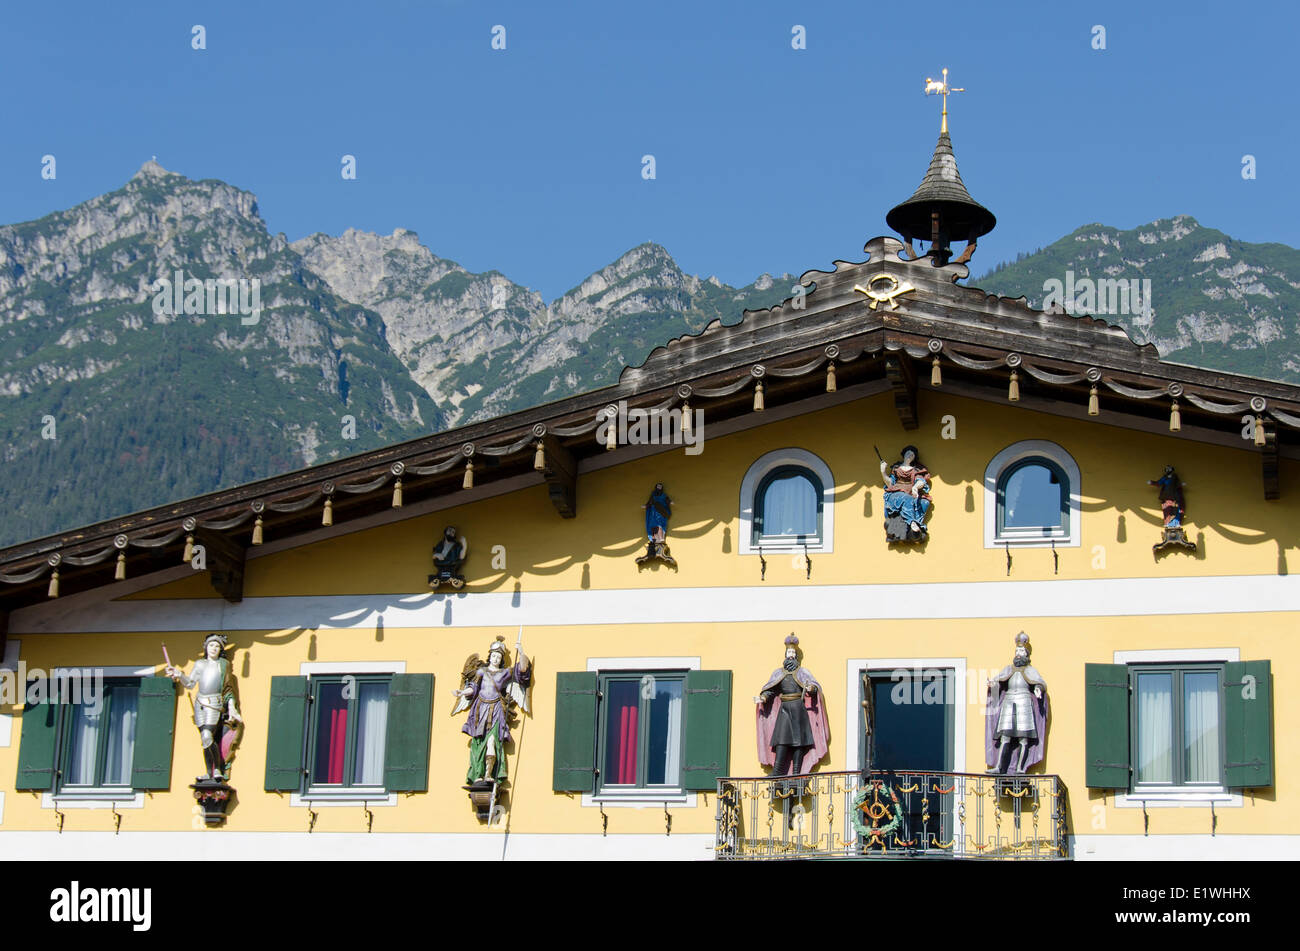 Garmisch-Partenkirchen, a mountain resort town in Bavaria, southern Germany Stock Photo